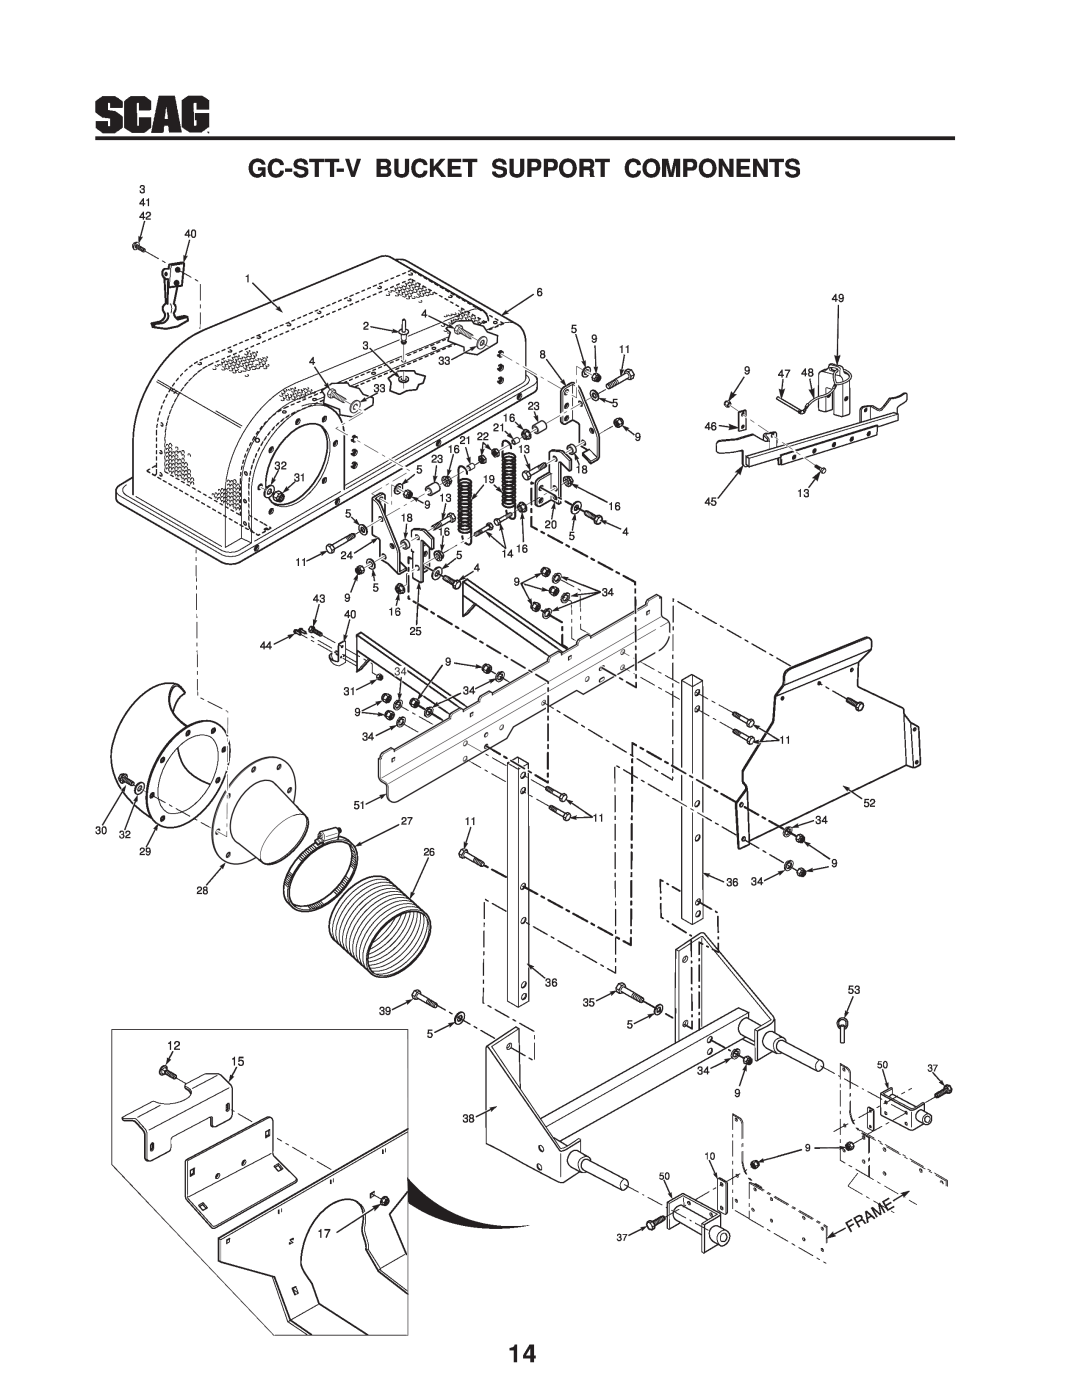 Scag Power Equipment GC-STT-V operating instructions Gc-Stt-V Bucket Support Components, 2711 